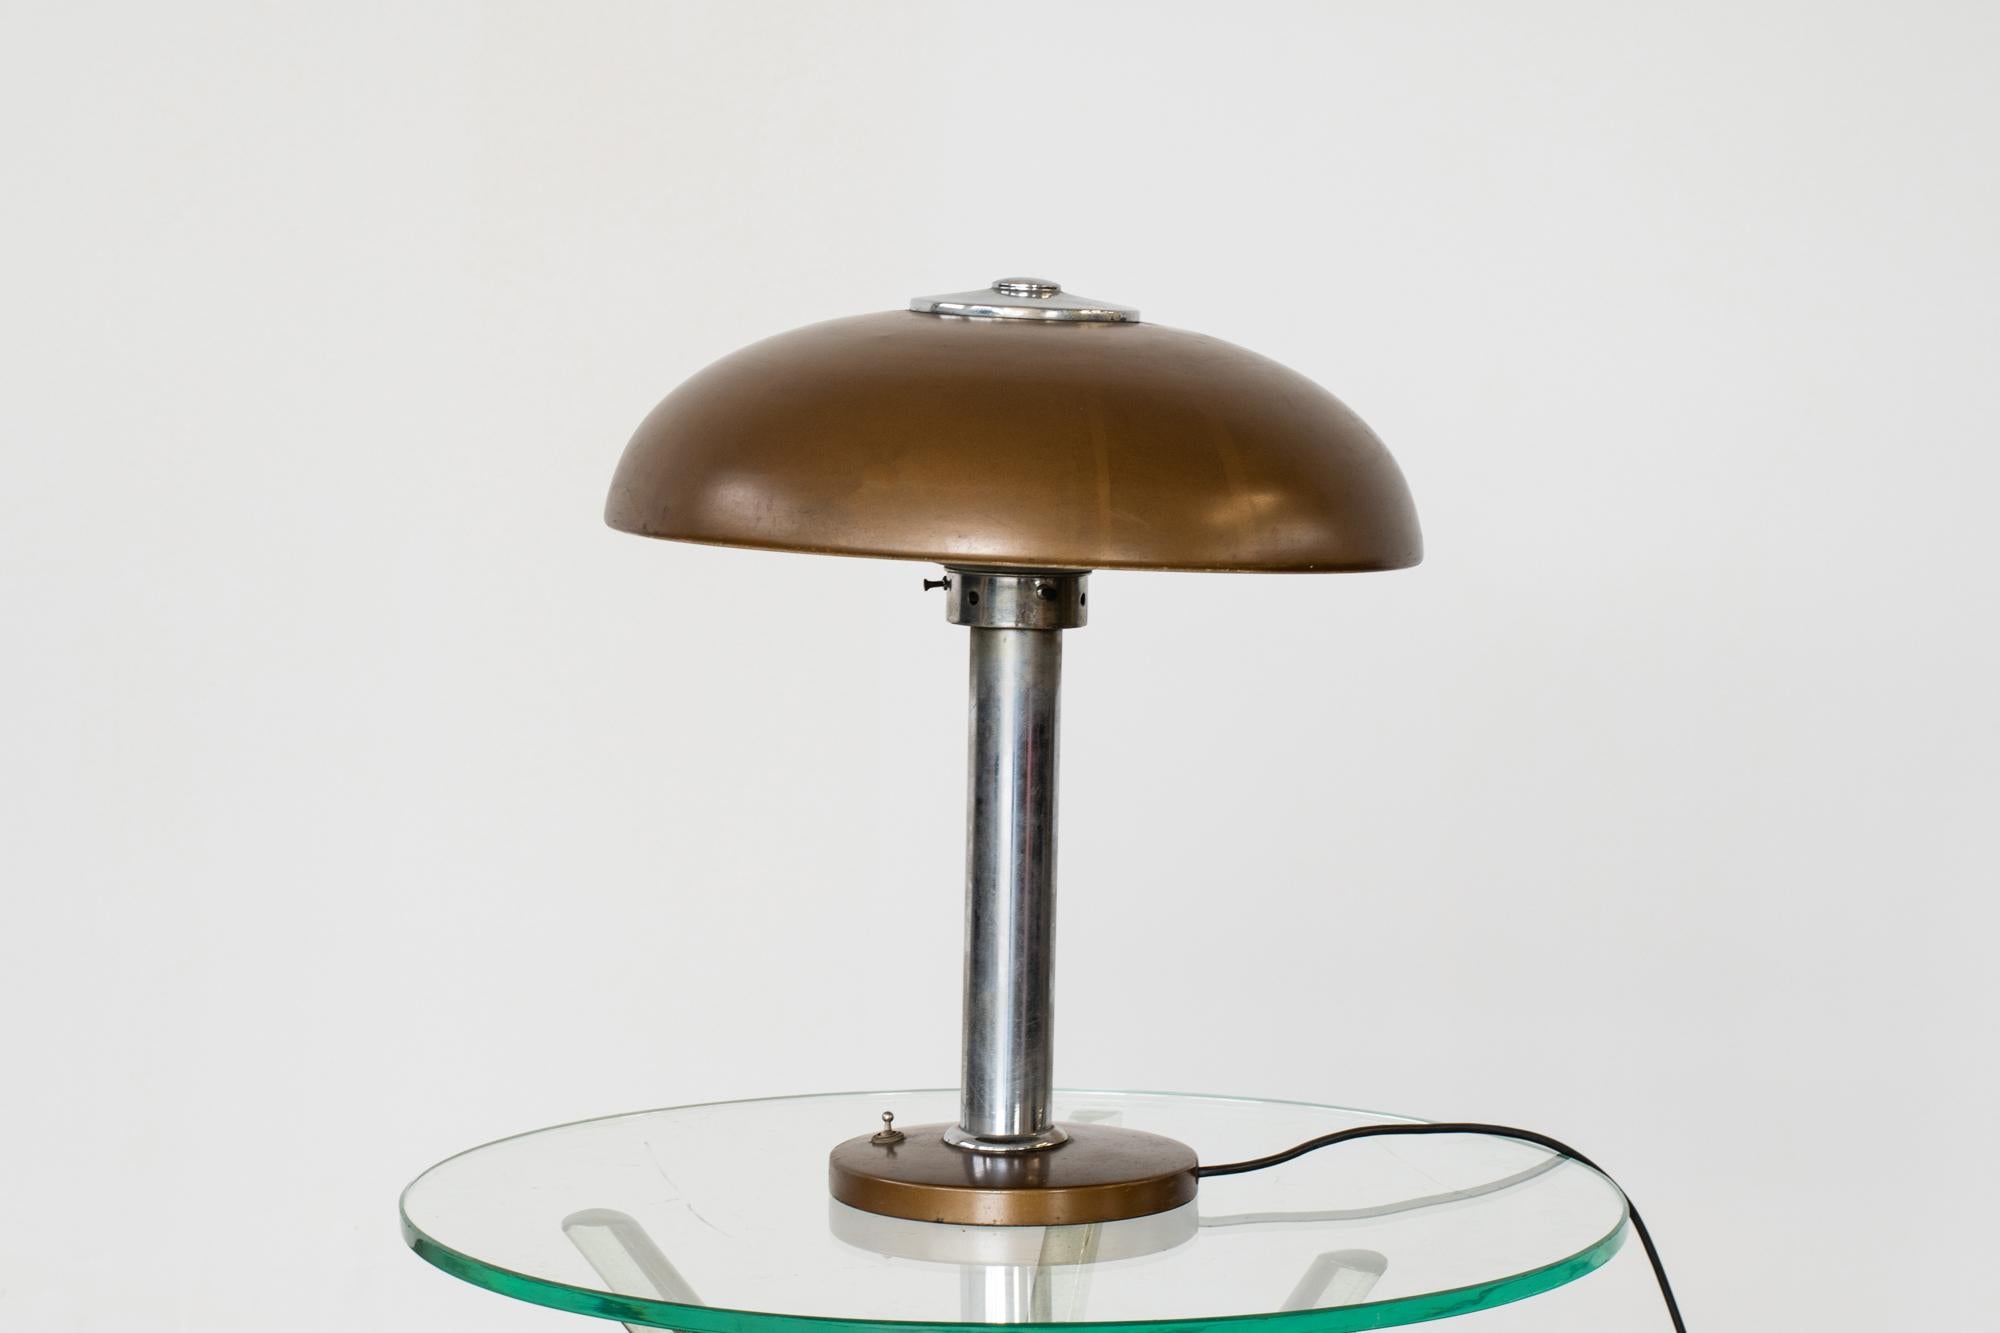 Aluminum Gio Ponti Aluminium Table Lamp by Pollice, Mid-Century Modern, 1940s Italy